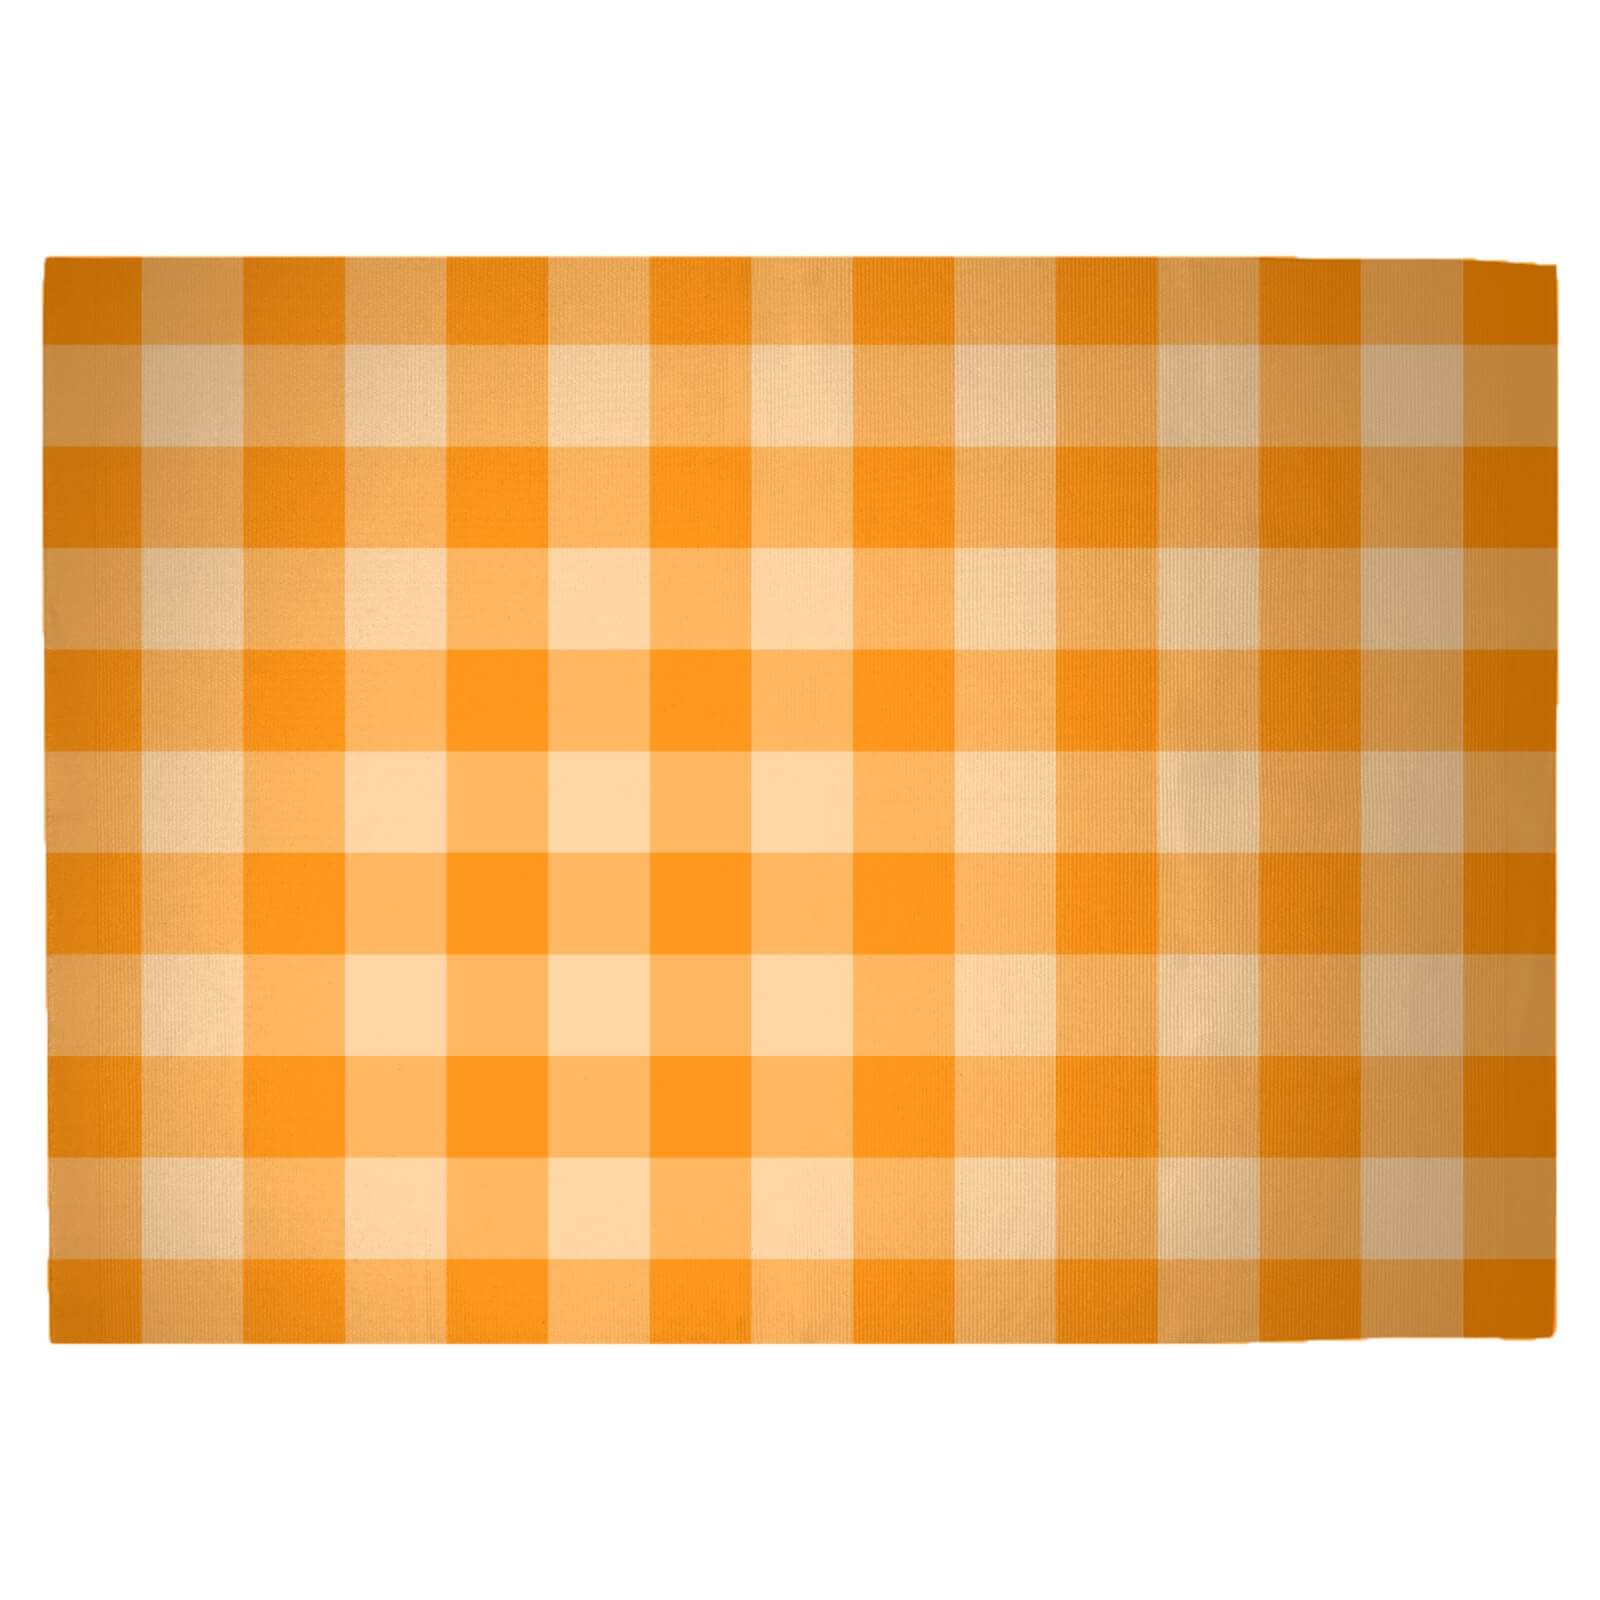 Baking Blanket Orange Woven Rug - Large